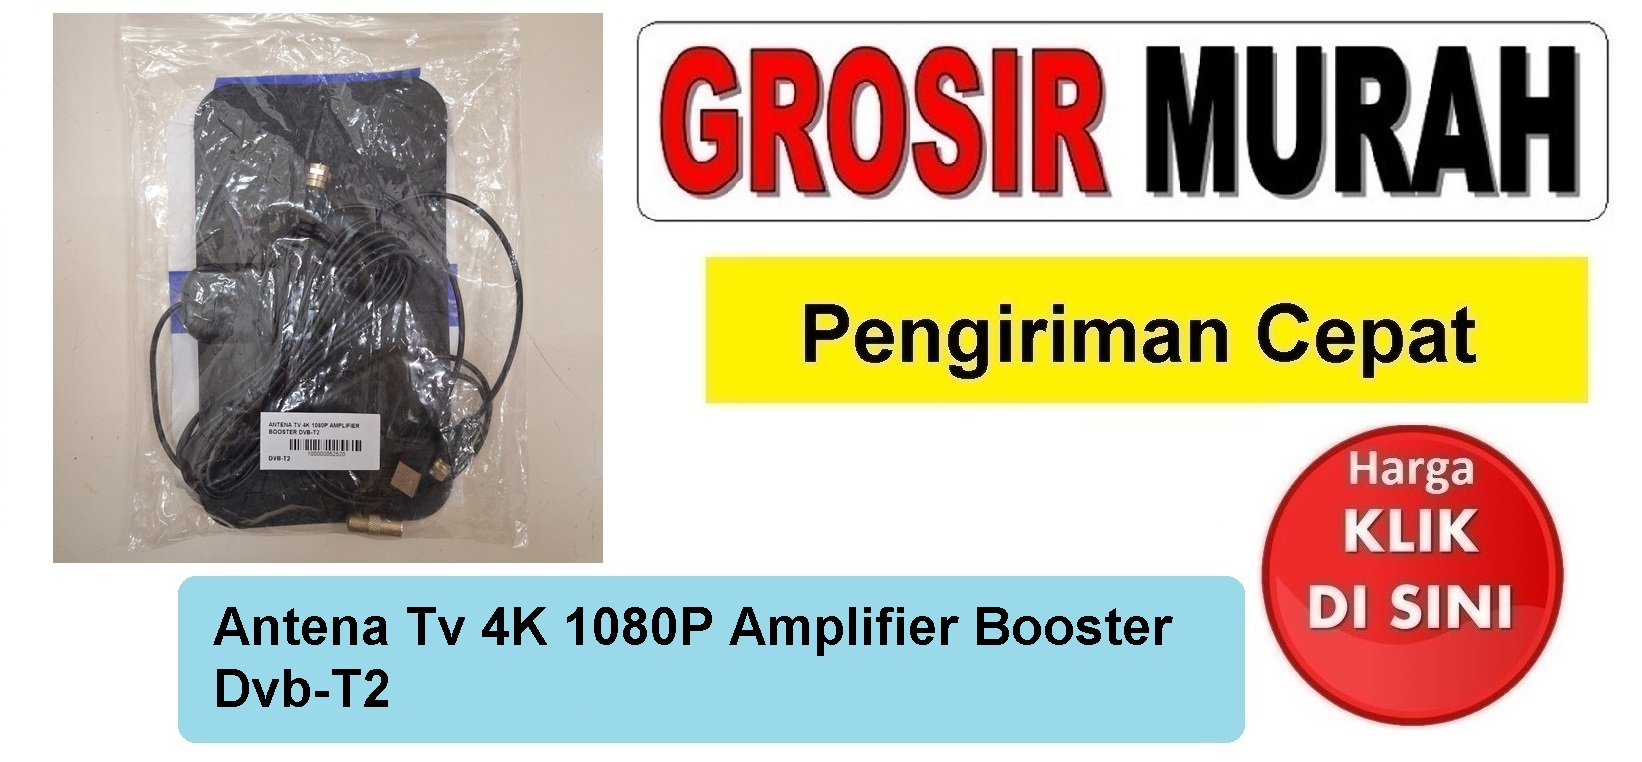 Antena Tv 4K 1080P Amplifier Booster Dvb-T2